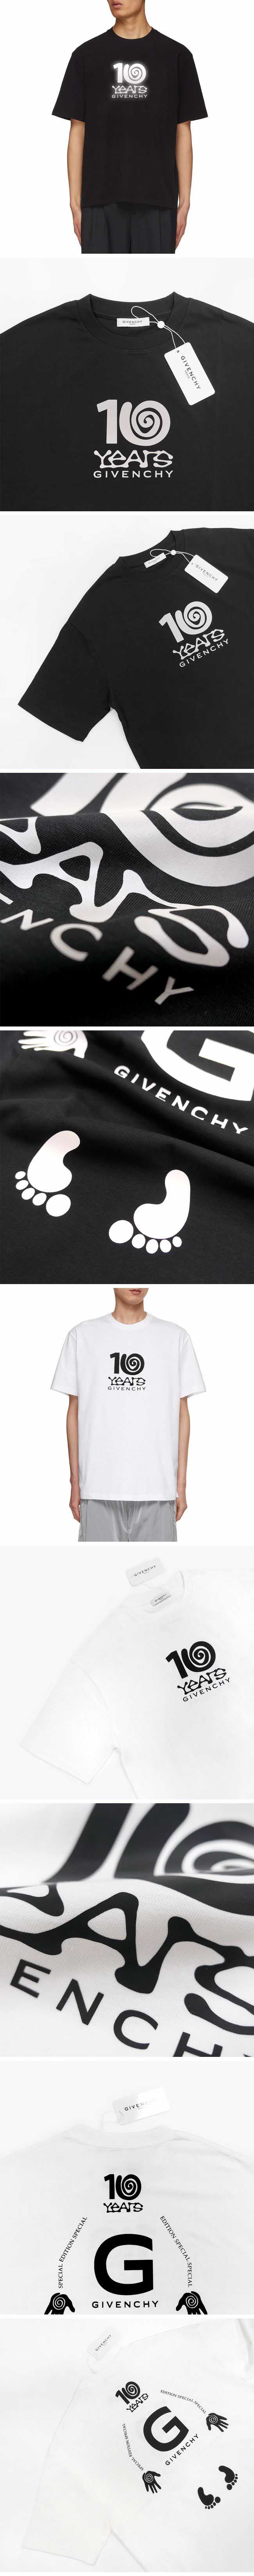 Givenchy 10 Years Design Tee ジバンシー 10 イヤー デザイン Tシャツ